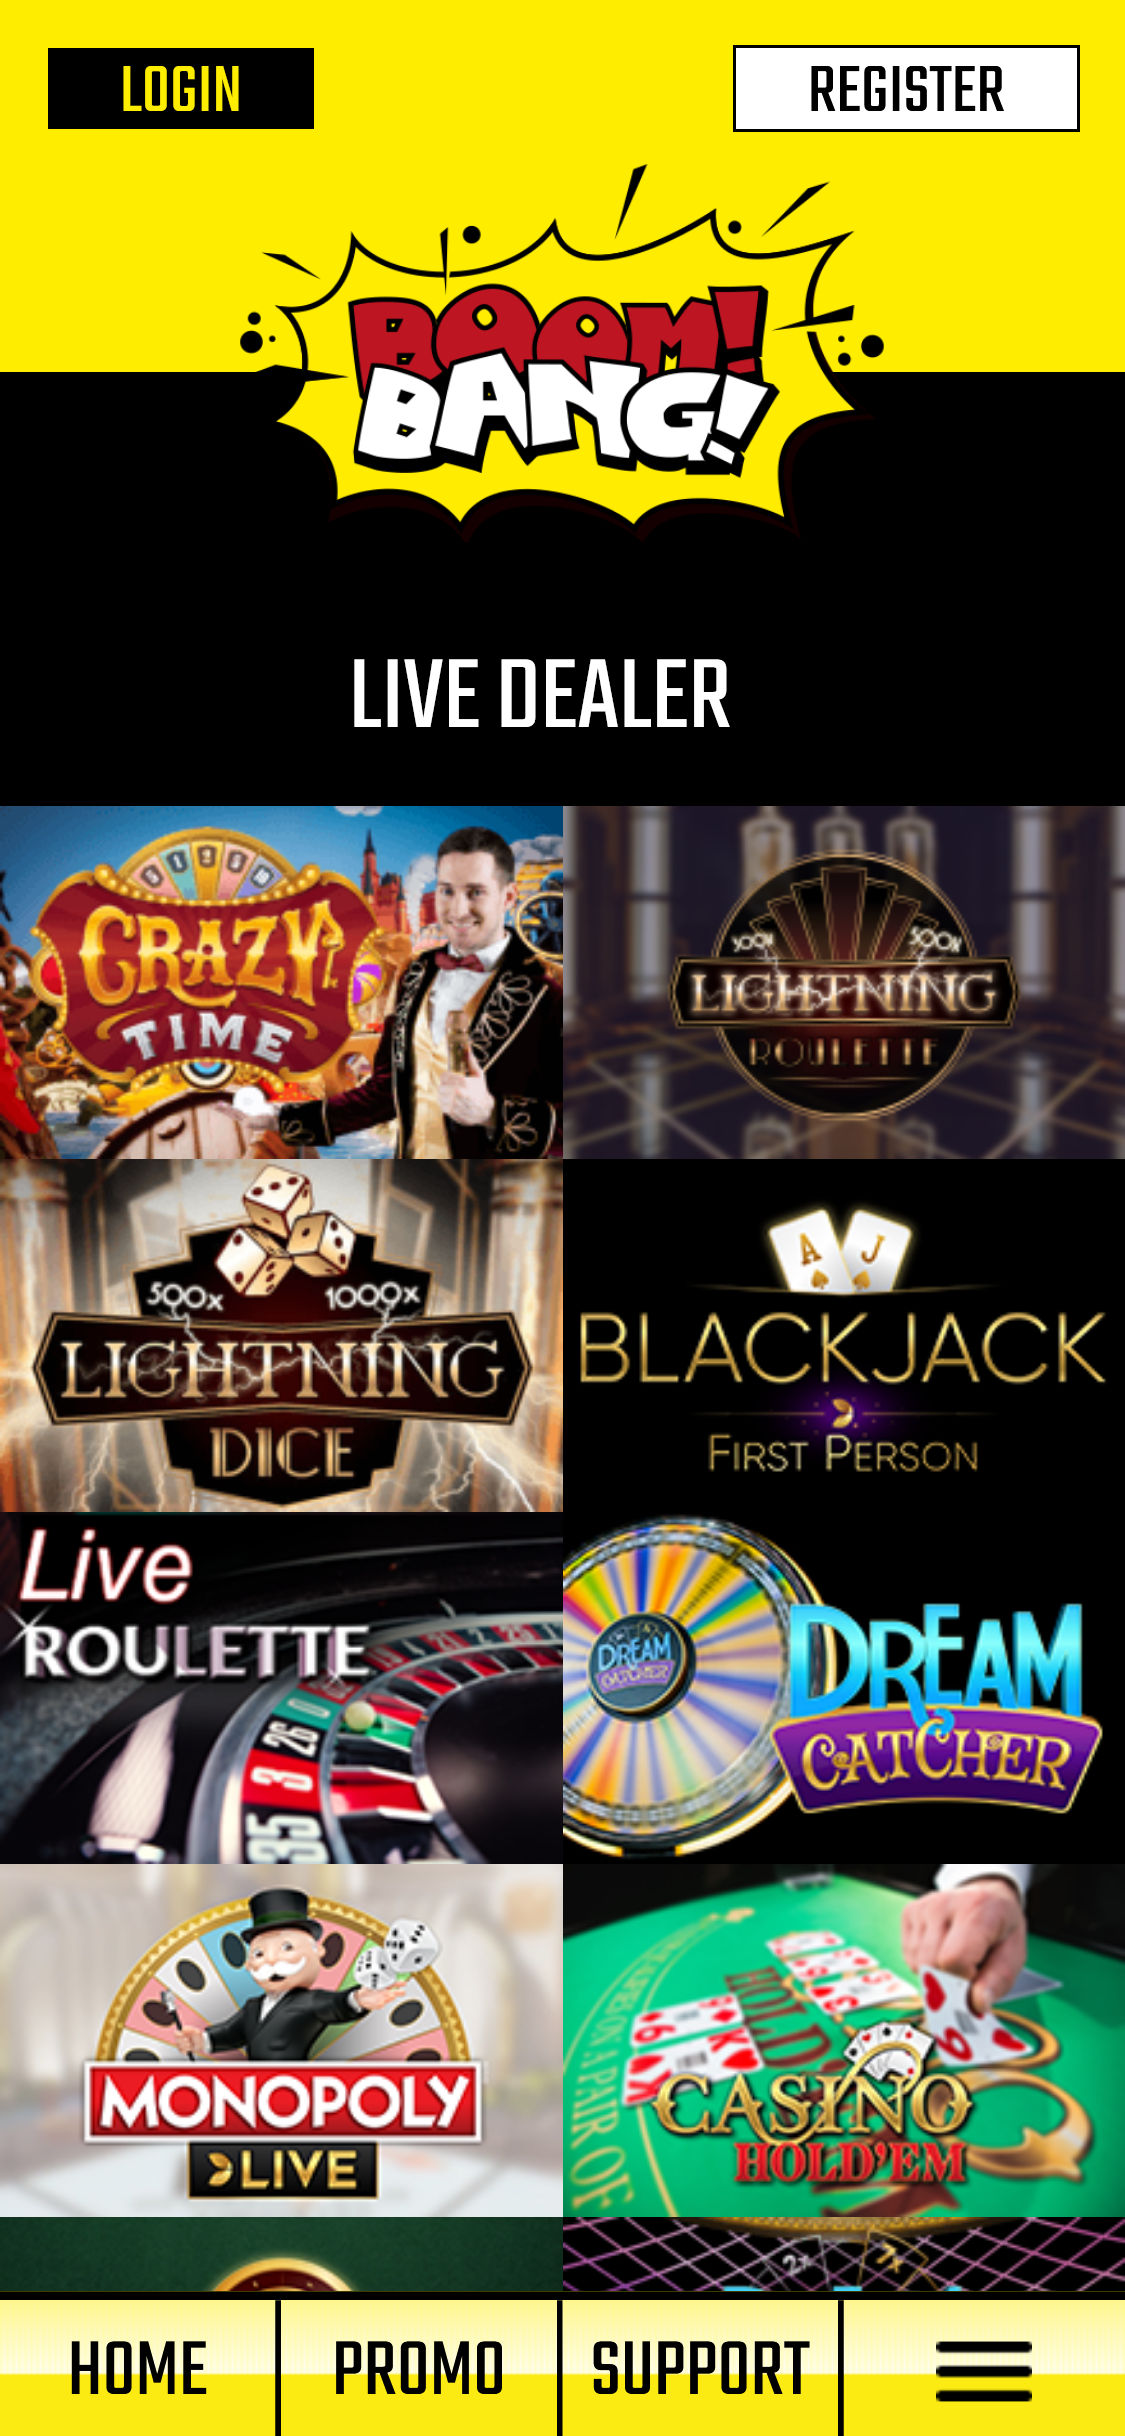 Boom Bang Casino Mobile Live Dealer Games Review